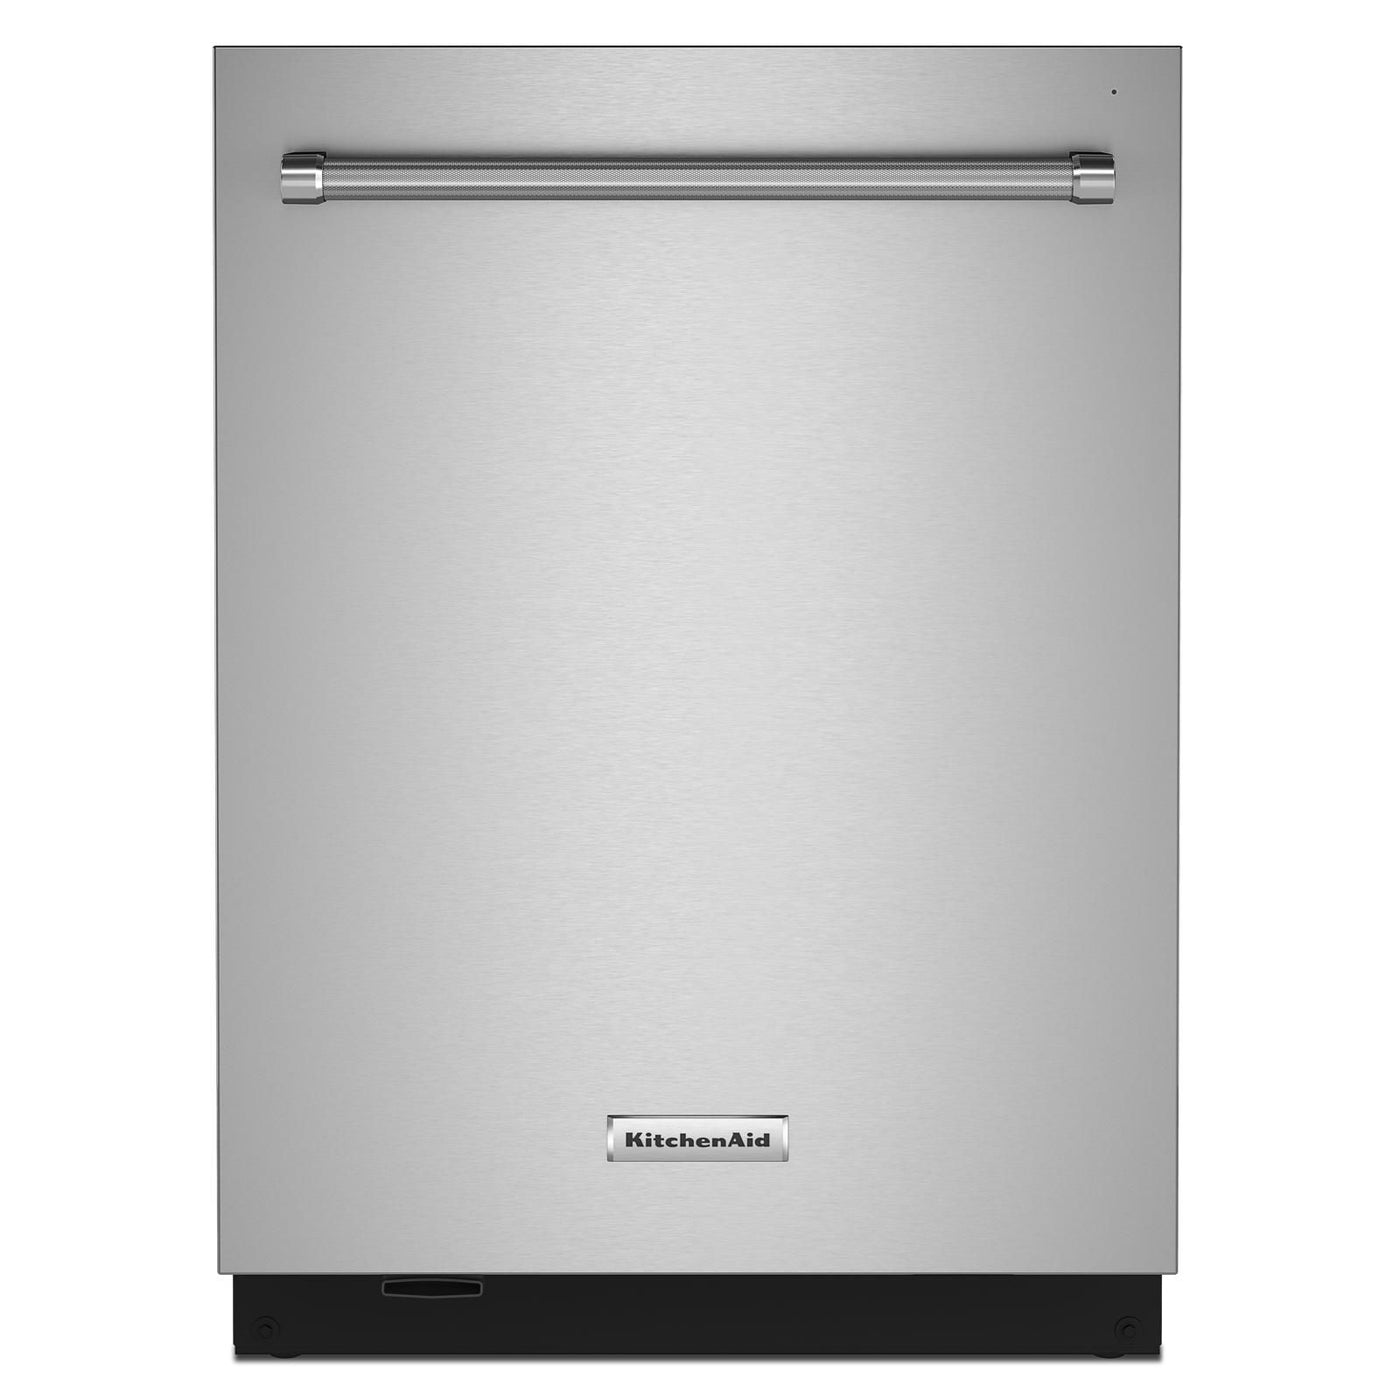 KitchenAid® PrintShield Stainless 24" Dishwasher with Towel Bar Handle - KDTM804KPS